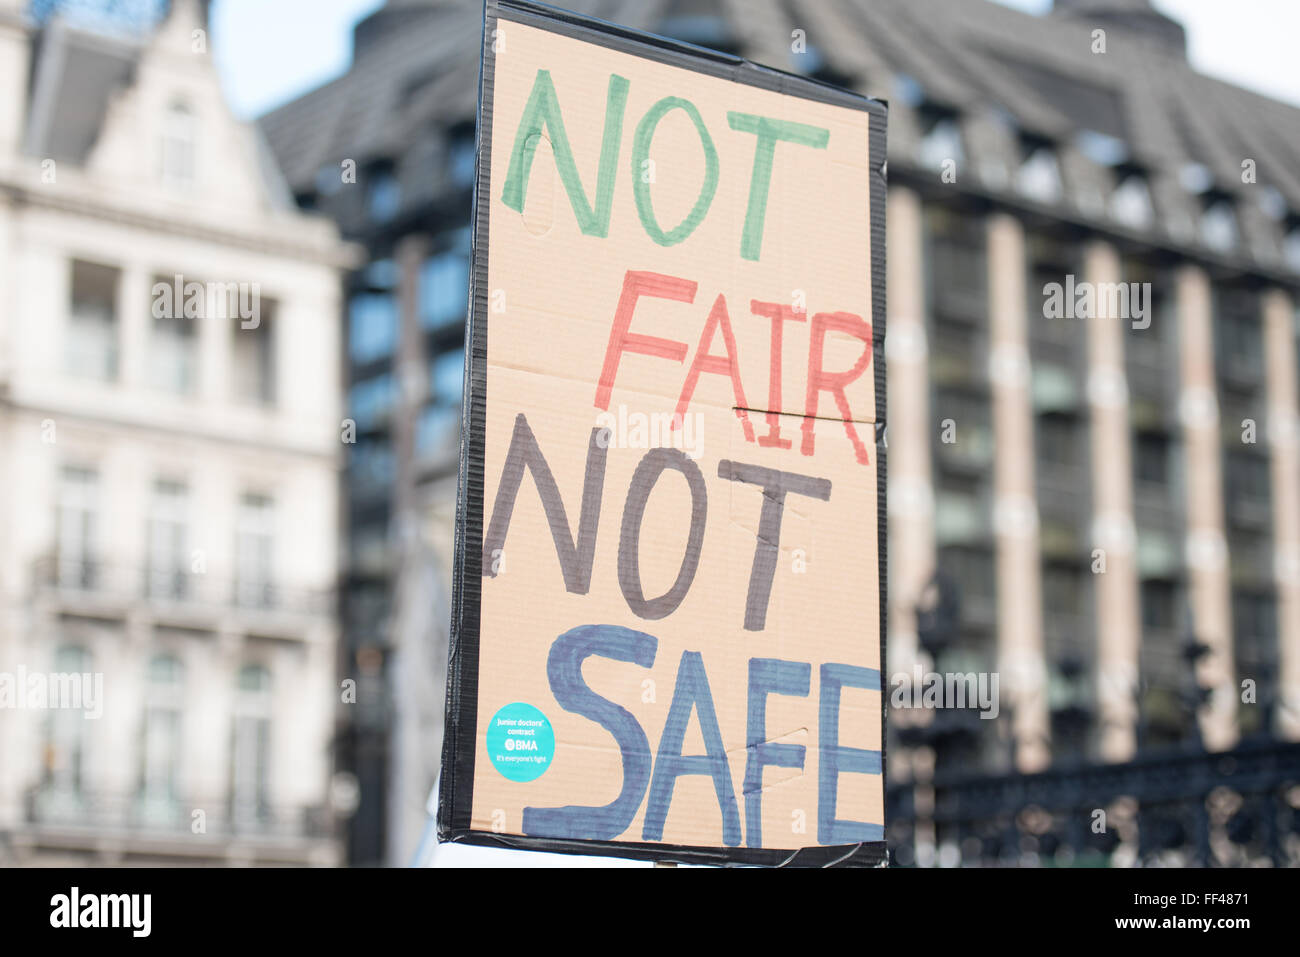 London, UK. 10th February, 2016.  Junior doctors banner - not fair not safe Credit:  Ian Davidson/Alamy Live News Stock Photo